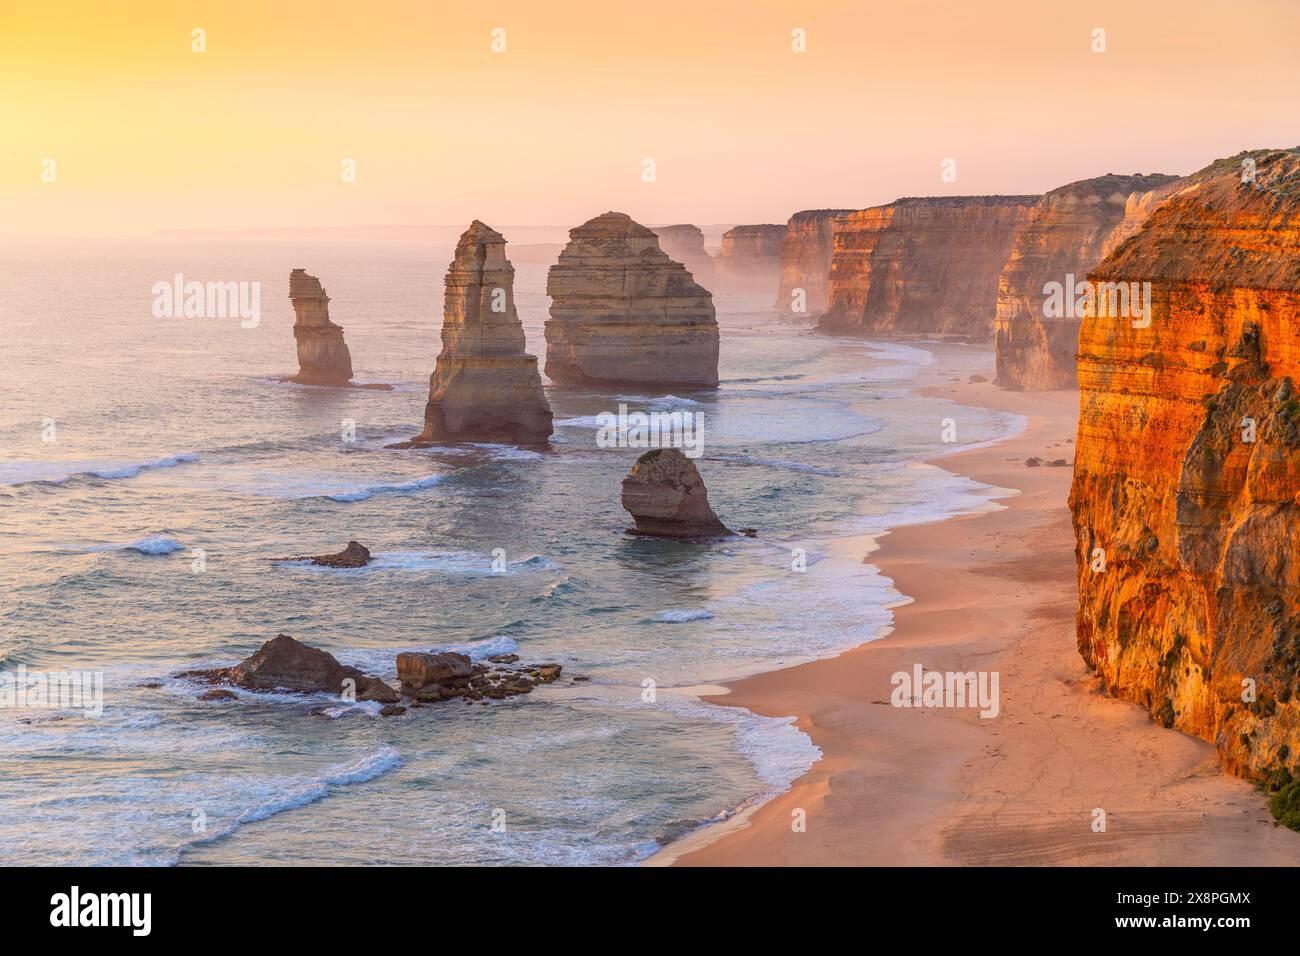 The 'Twelve Apostles' on the Great Ocean Road in Victoria, Australia,. Stock Photo